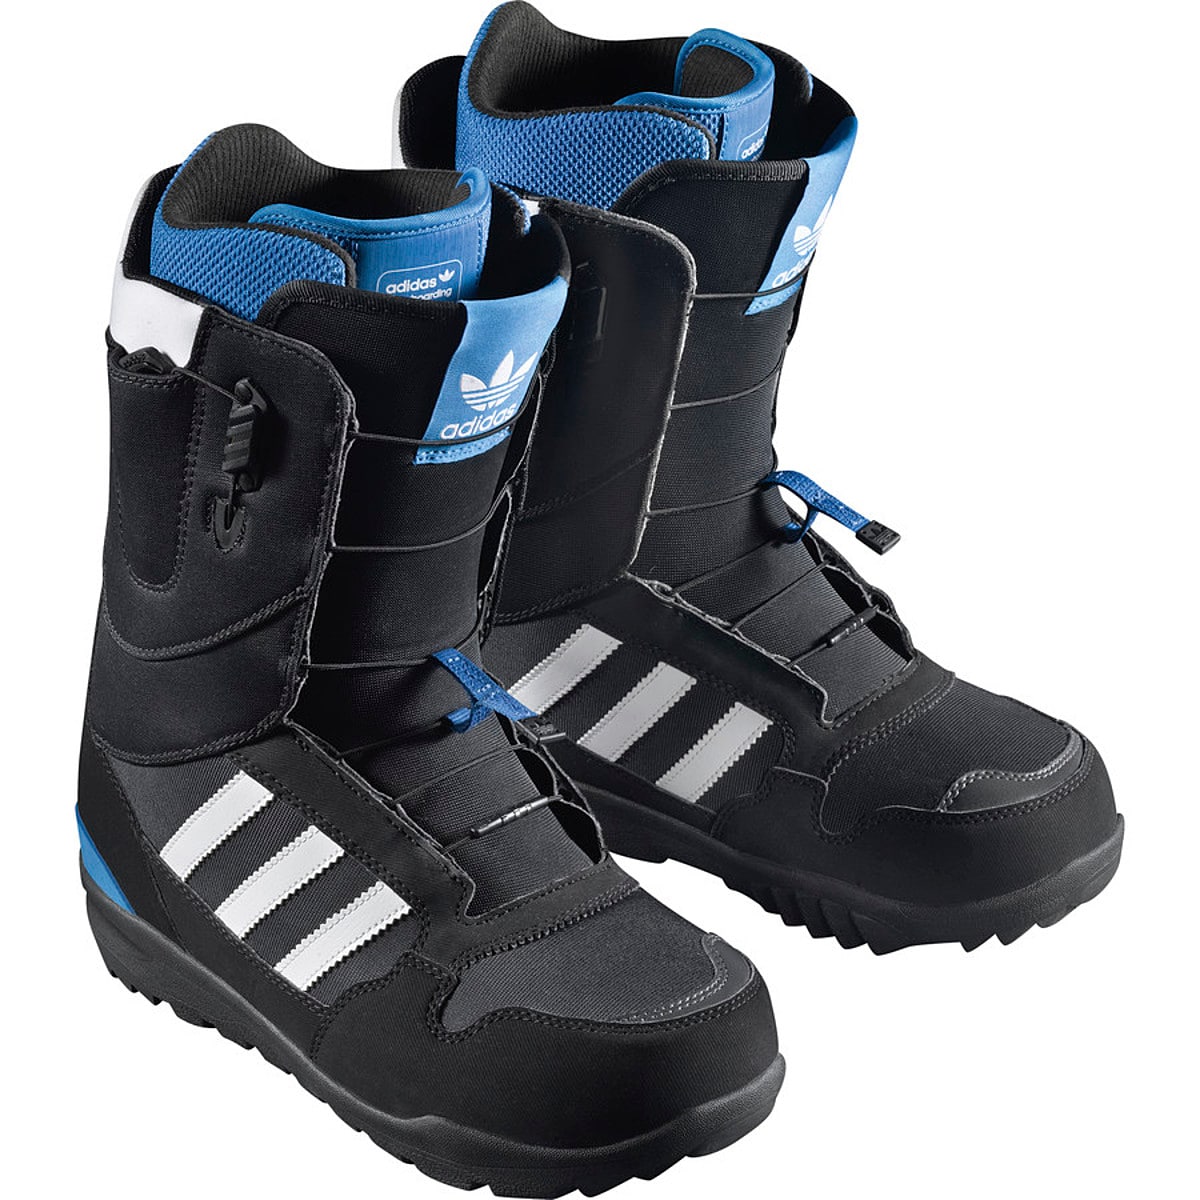 Adidas ZX 500 Snowboard Boot - Men's - Snowboard